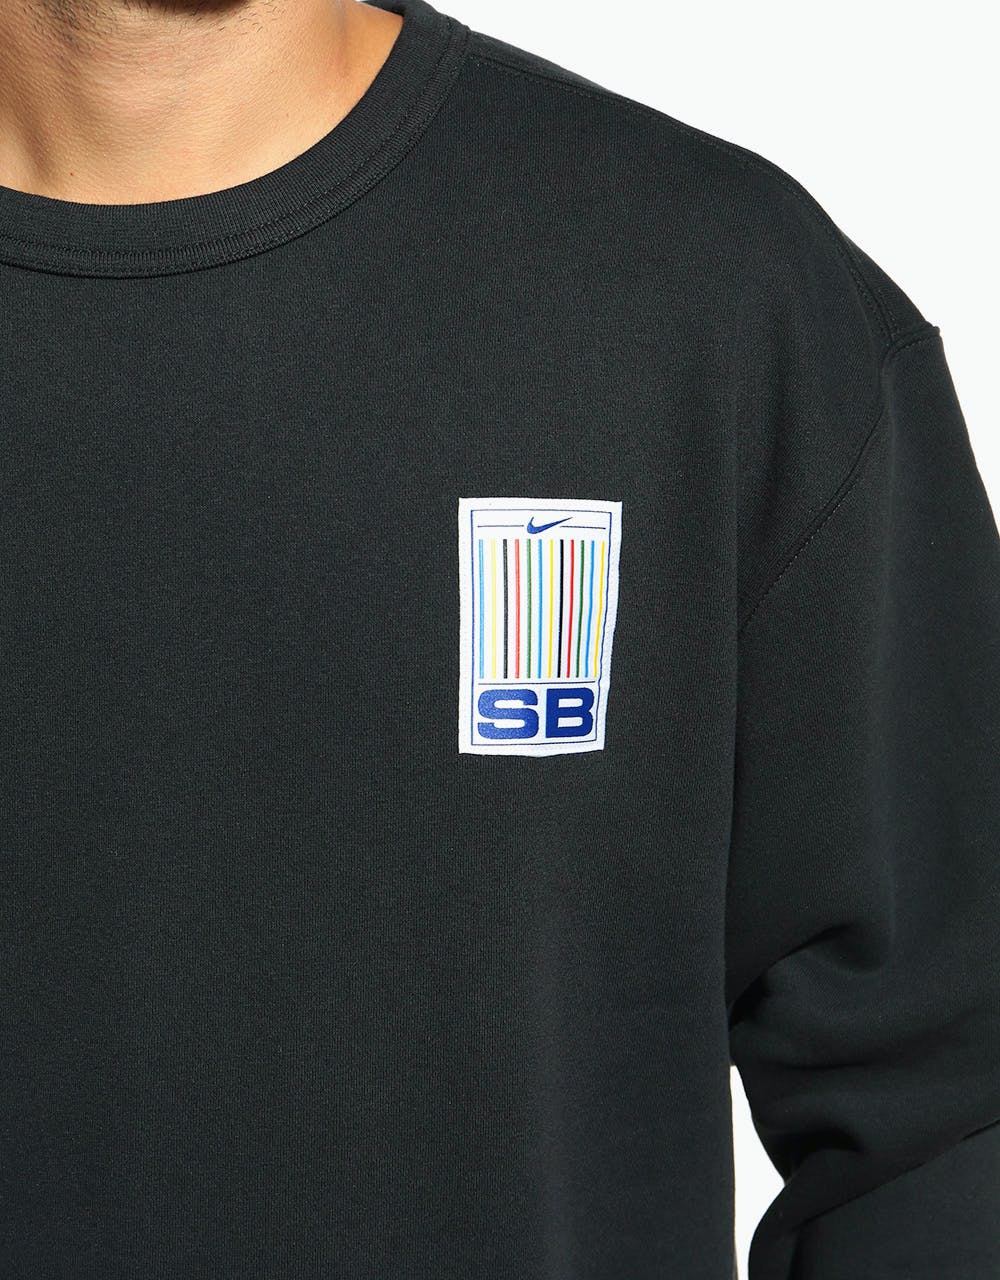 Nike SB Stripes Crewneck Sweatshirt - Black/White